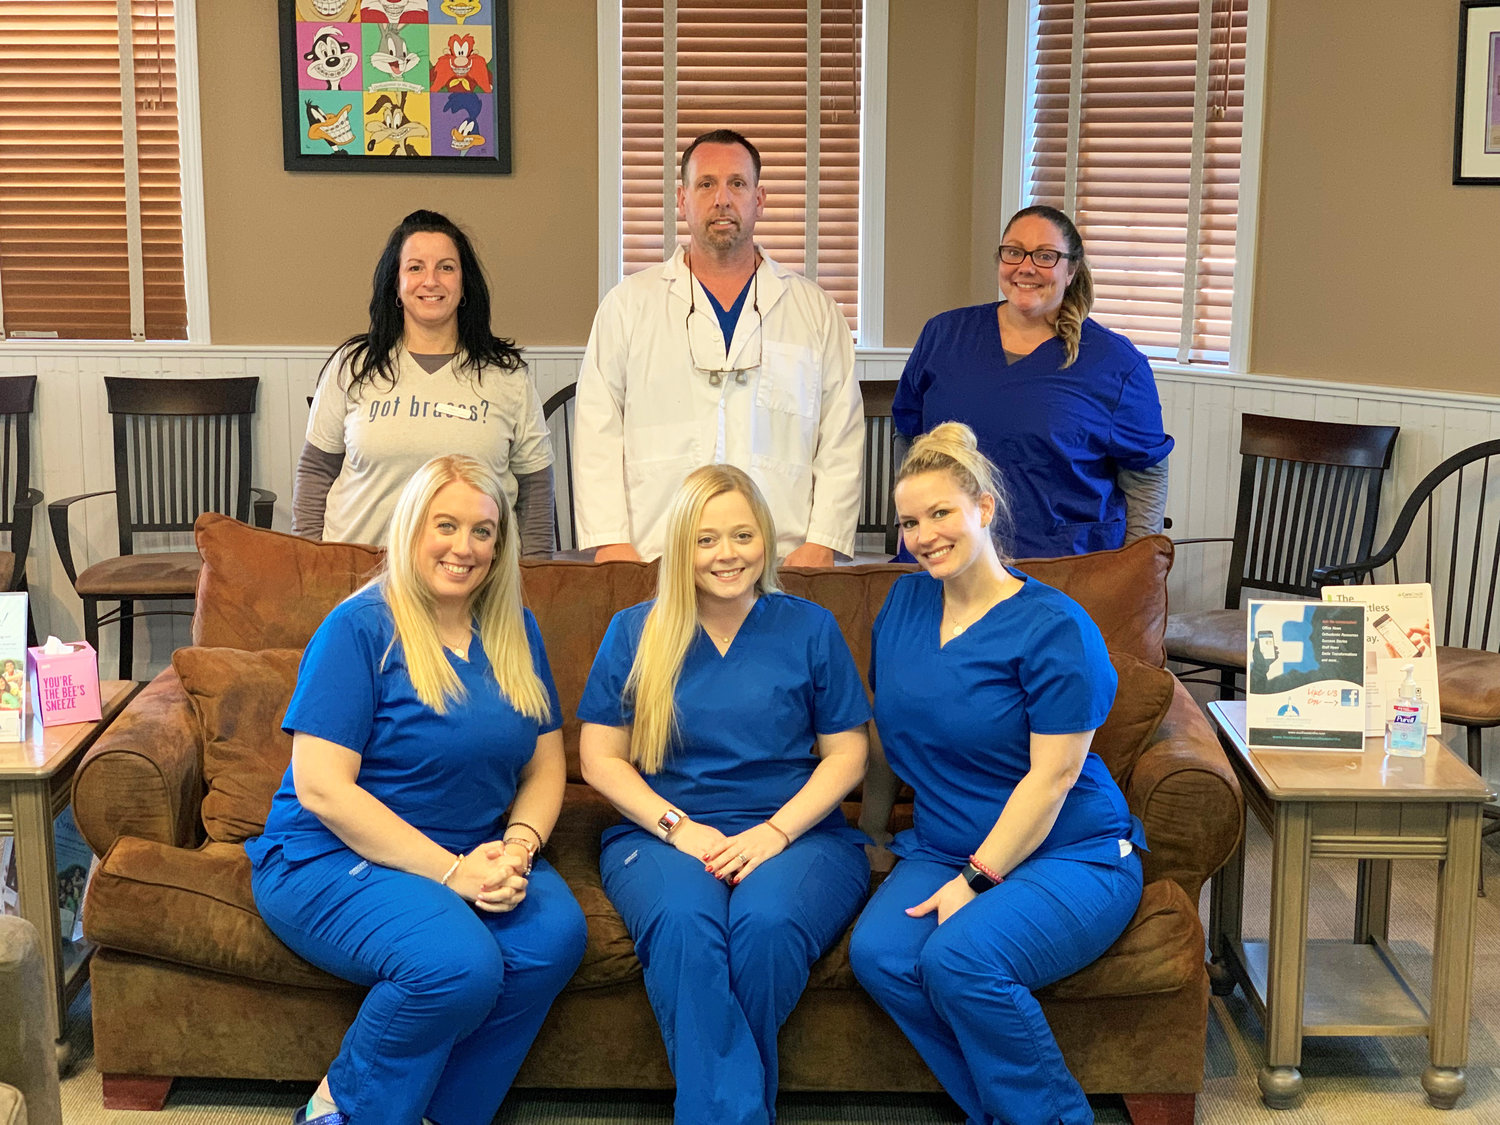 The Southeast Orthodontics team: Dawn Ford, Dr. Brian Gaudreault, Brittany Davis, Jen Grasso, Tina Conti and Melissa Dodge.